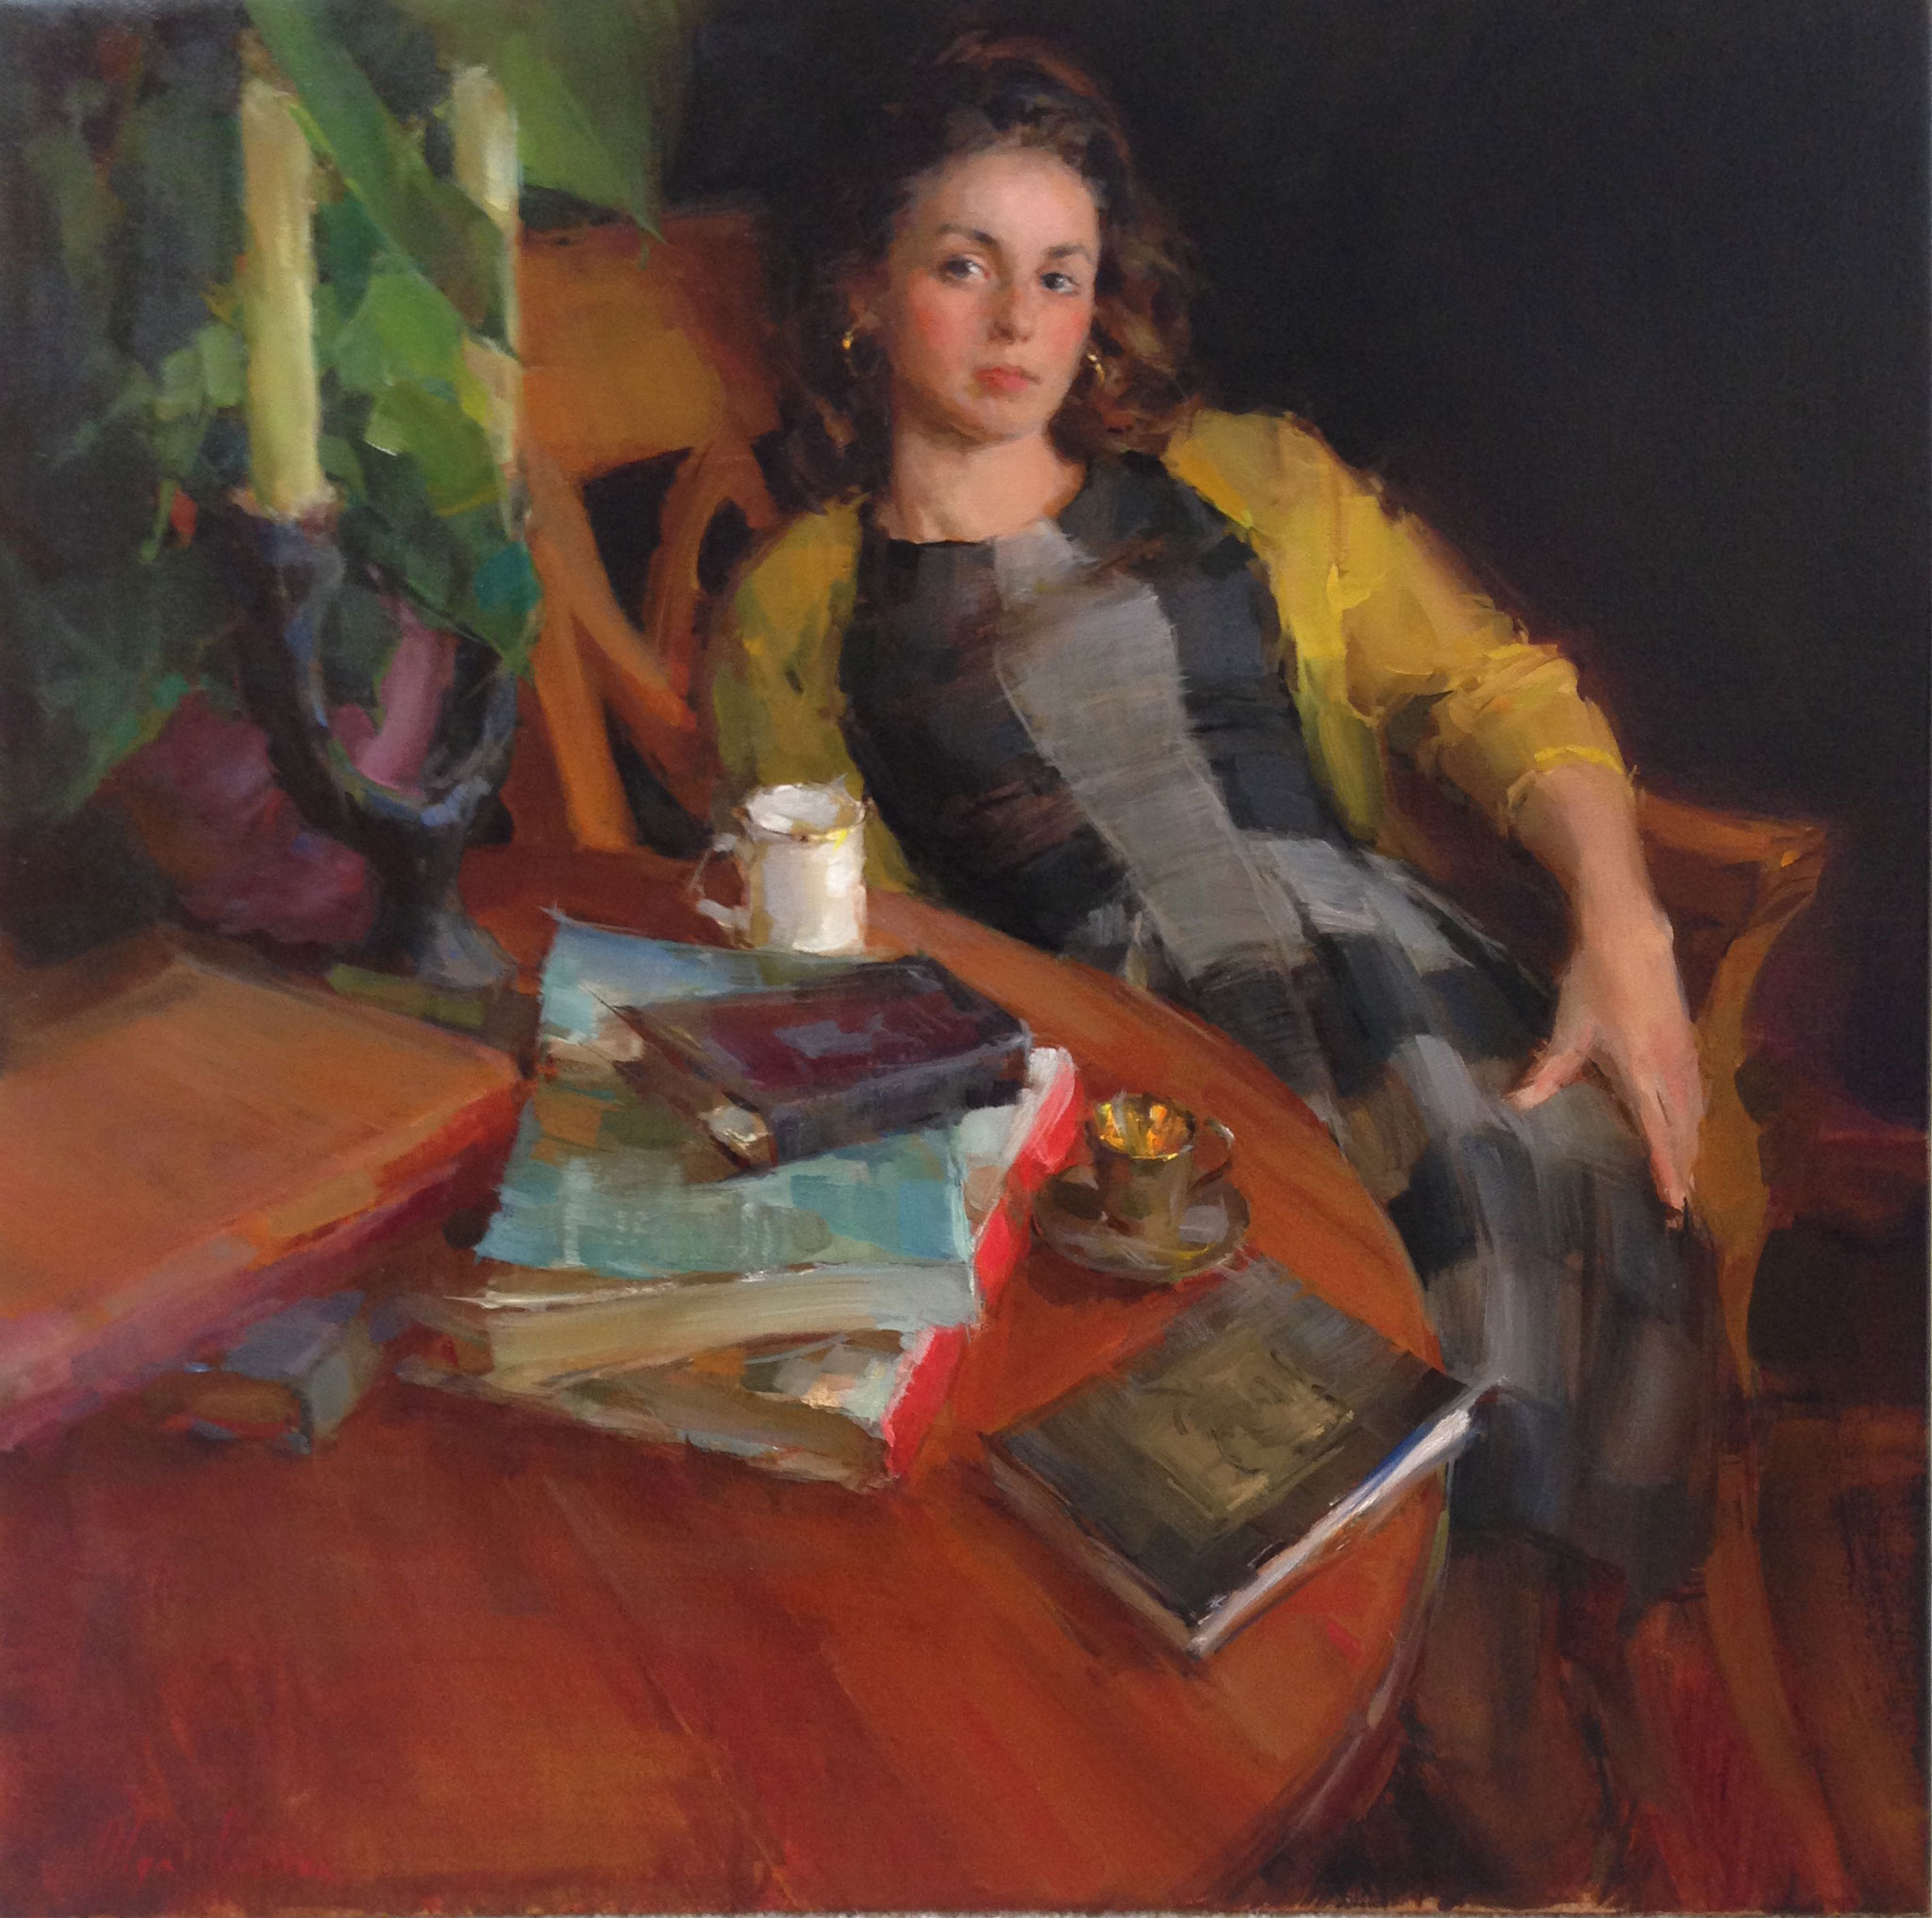 Painting composition - Olga Krimon - RealismToday.com